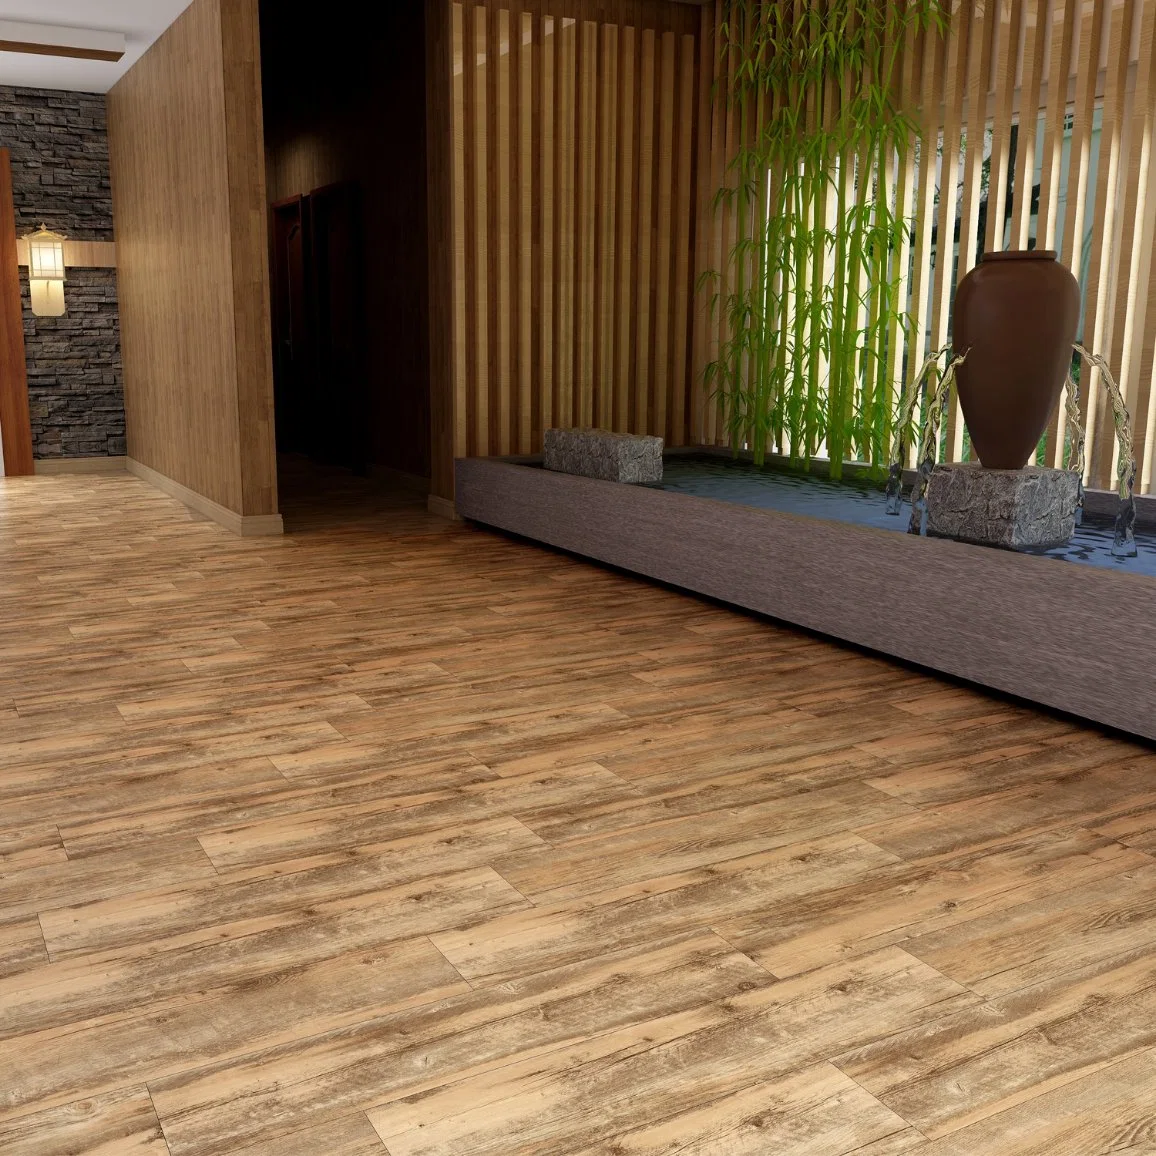 Vinyl/Laminated Plastic/Wood/Composite/Solid/Timber PVC/Spc/Lvt/Rvp/Laminate/Hardwood/WPC/Bamboo/Hybrid/Luxury Tile/Rubber/Ceramic Parquet Plank Floor